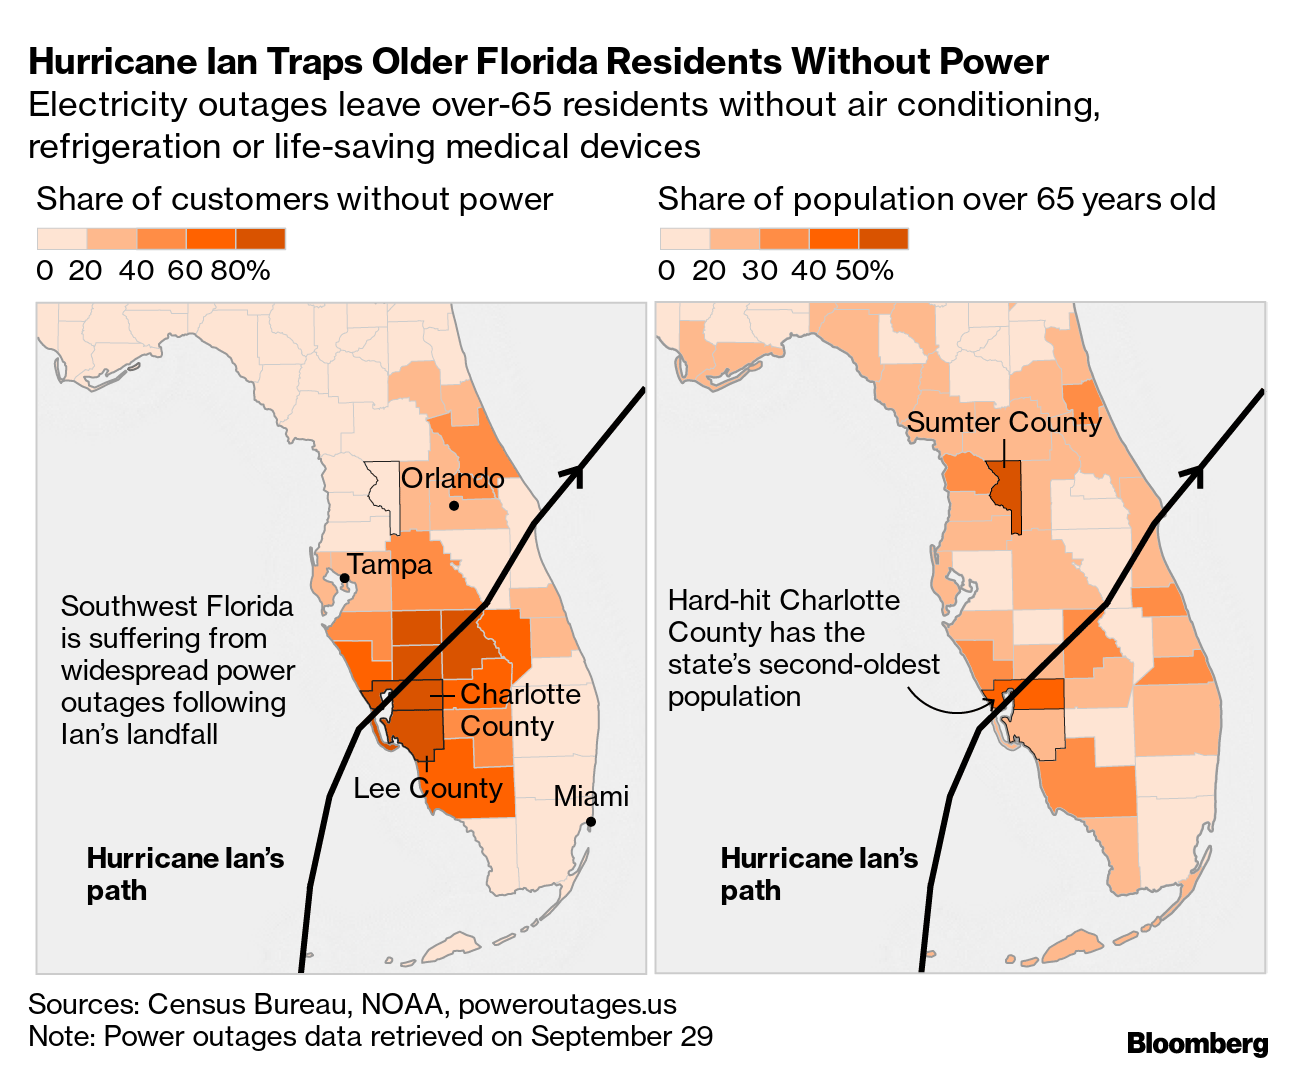 Florida's Retiree Population Bears Brunt of Hurricane Ian - Bloomberg